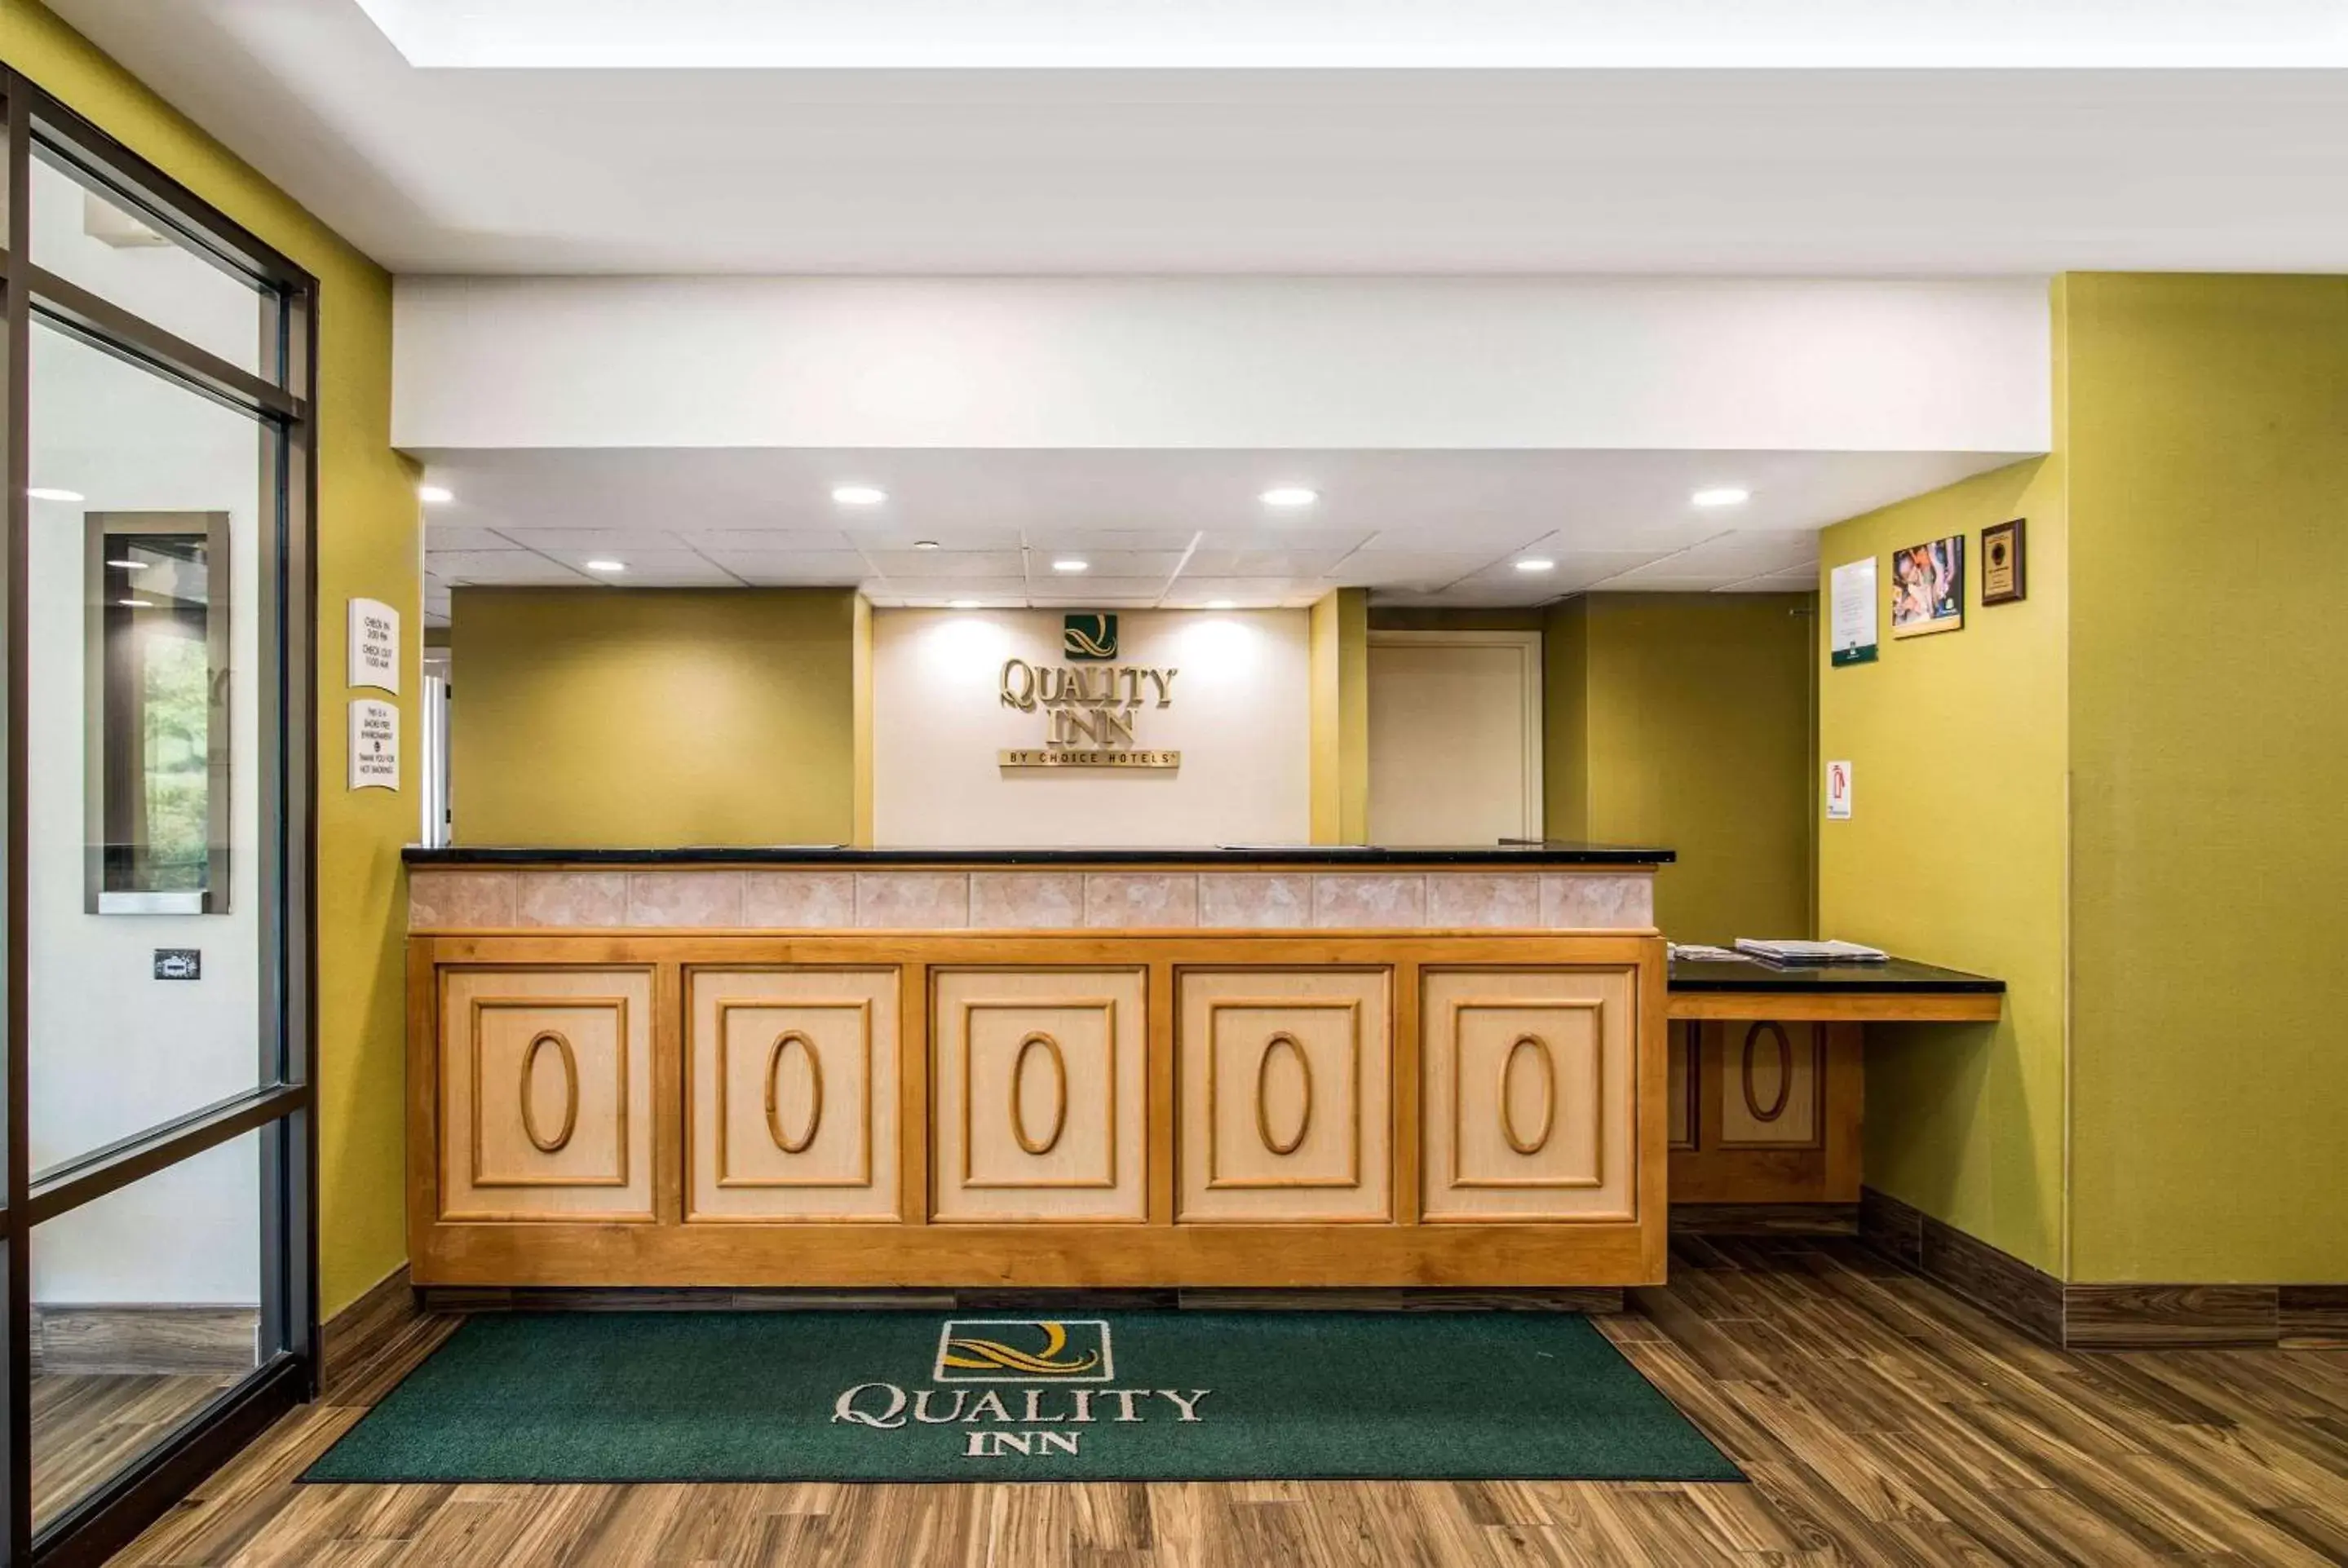 Lobby or reception, Lobby/Reception in Quality Inn Loudon/Concord